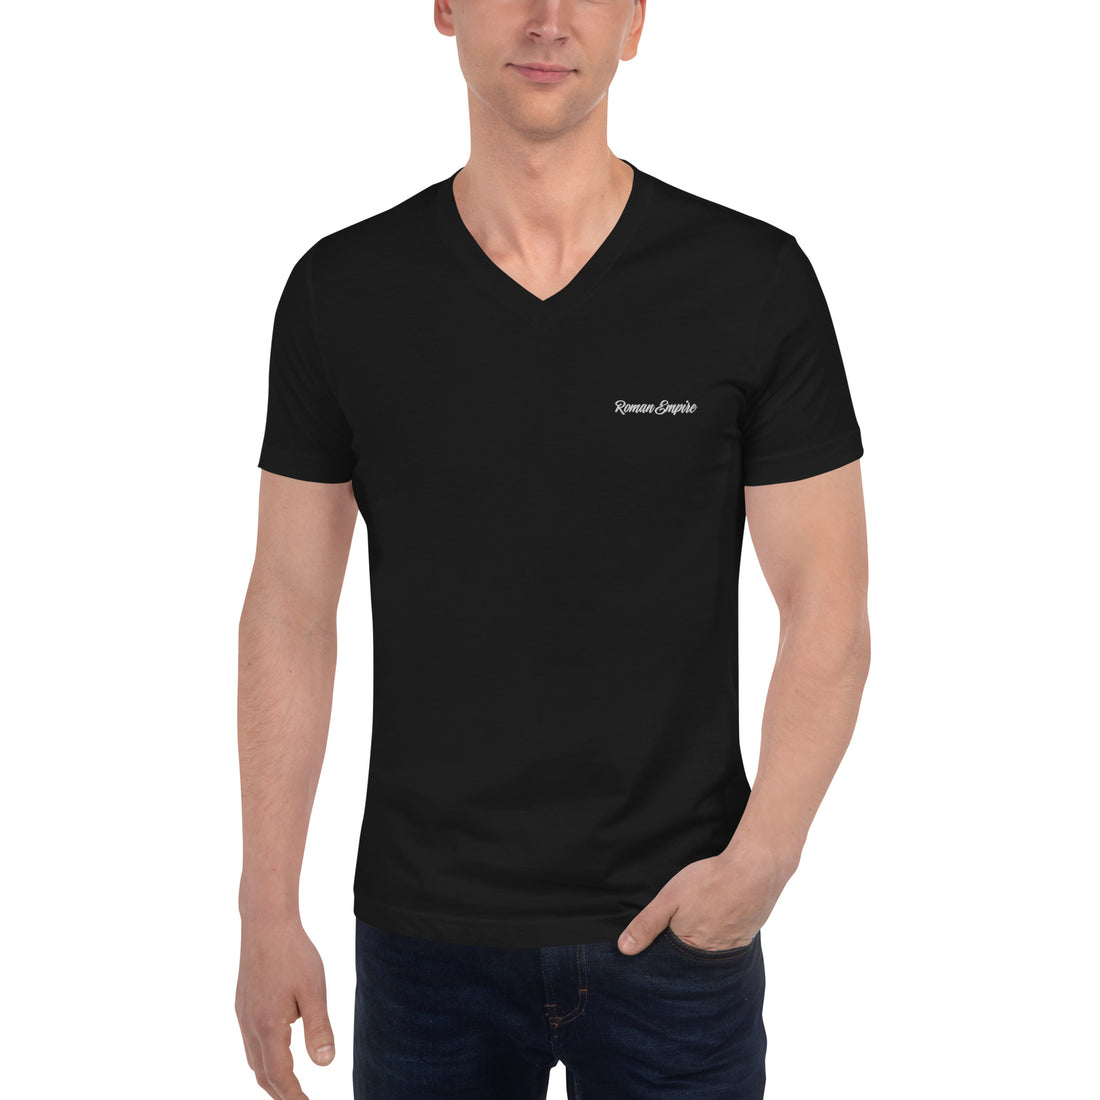 Short Sleeve V-Neck T-Shirt - Roman Empire Black